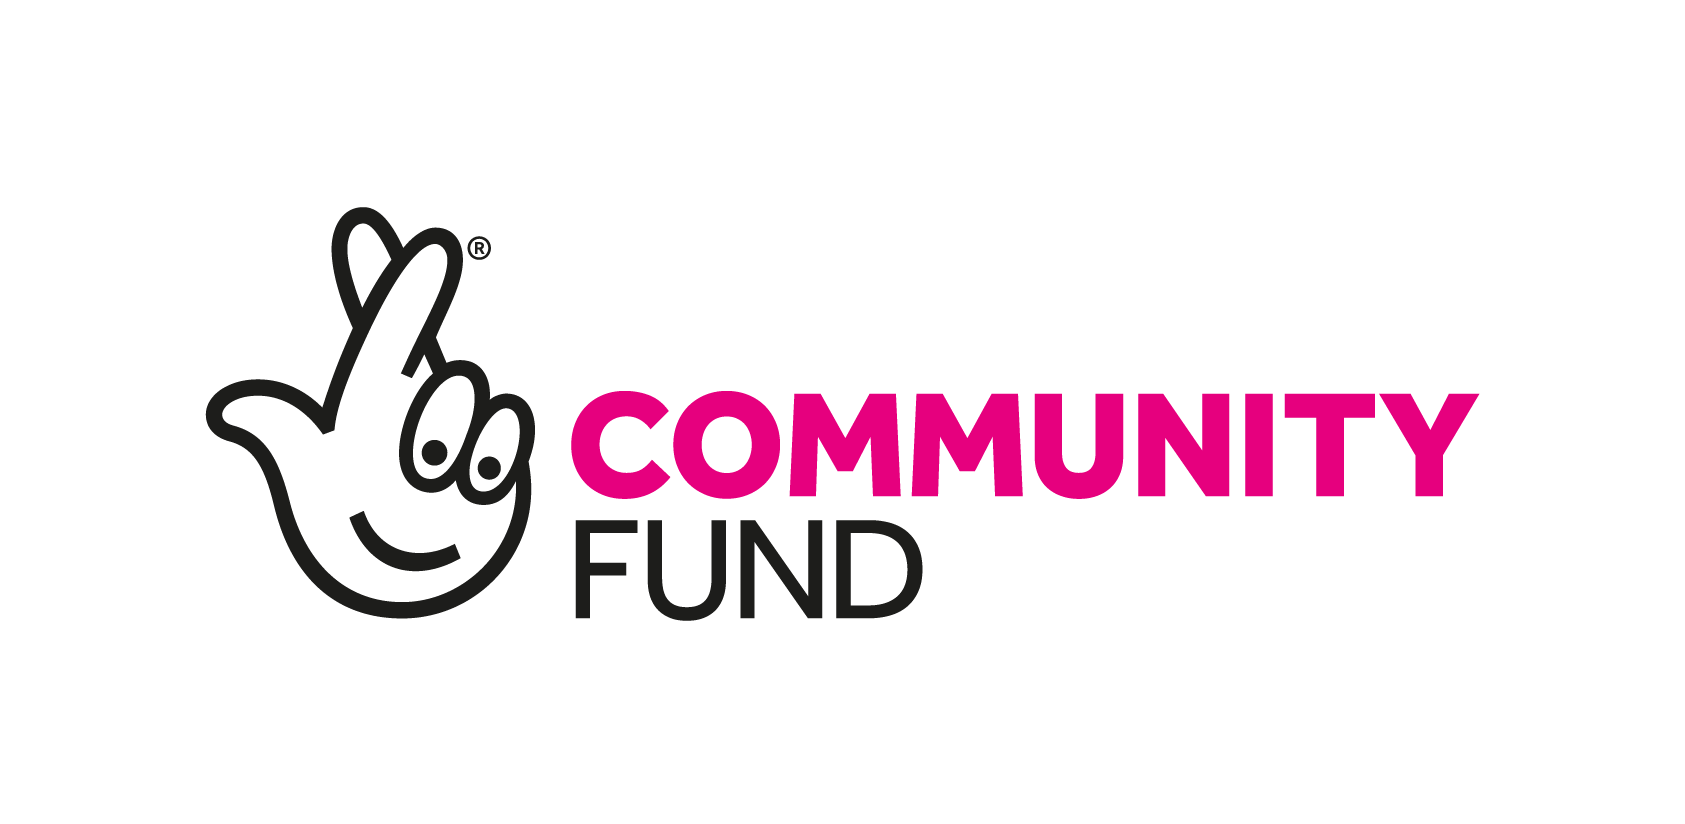 TNL community fund